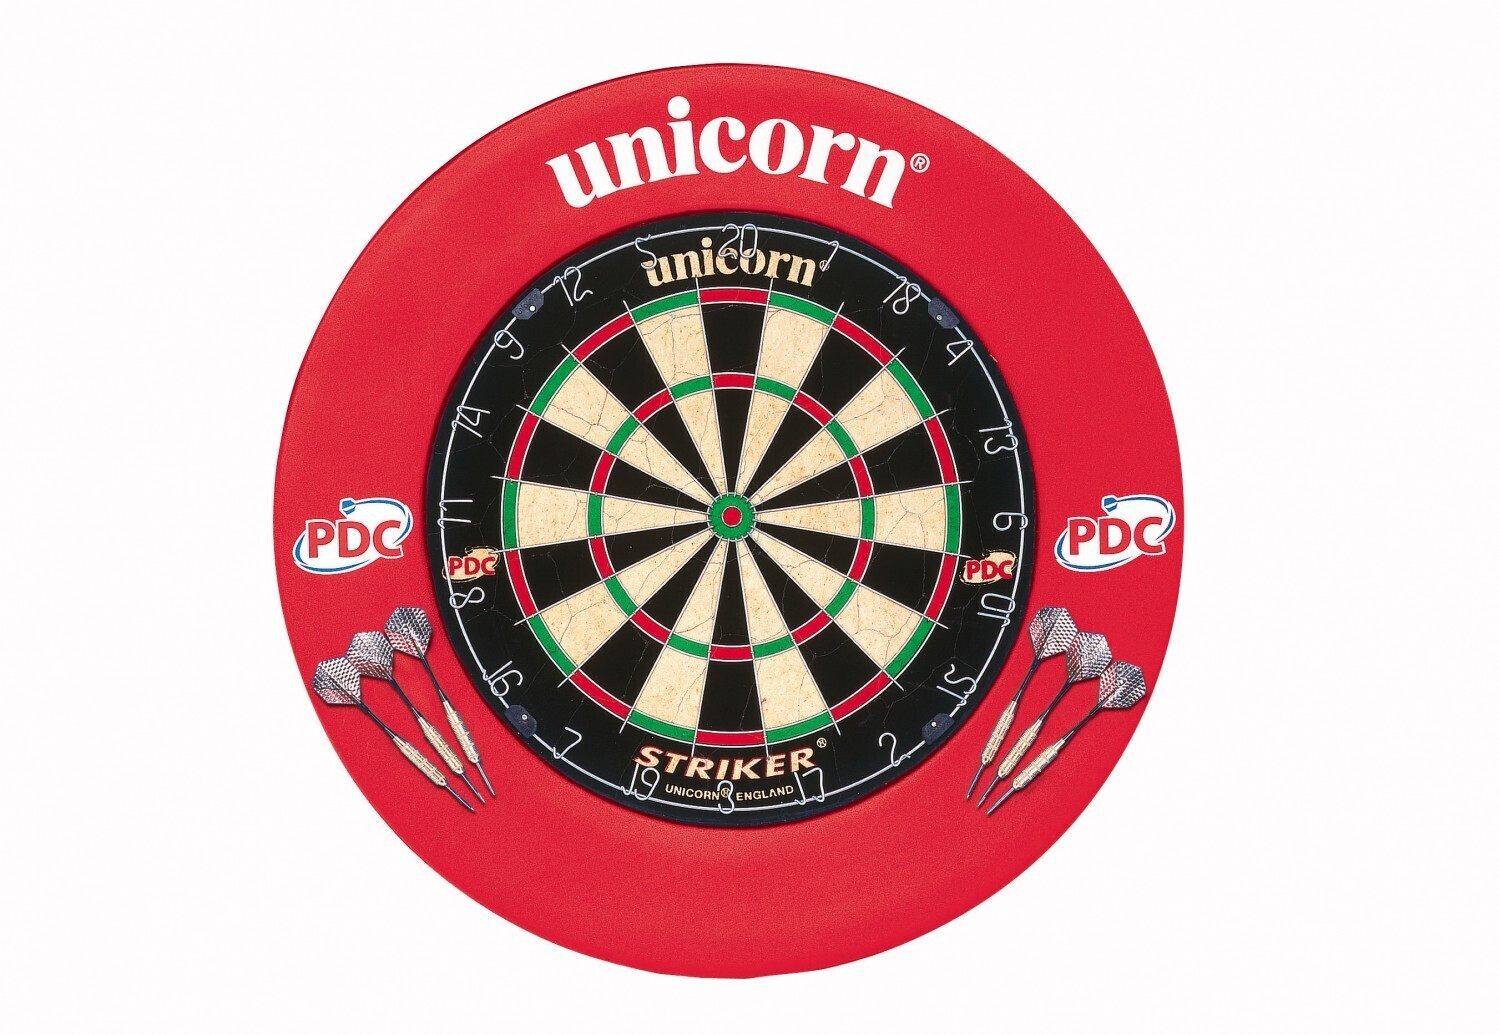 Unicorn Darts PDC Striker ab 118,99 € Preisvergleich bei idealo.de